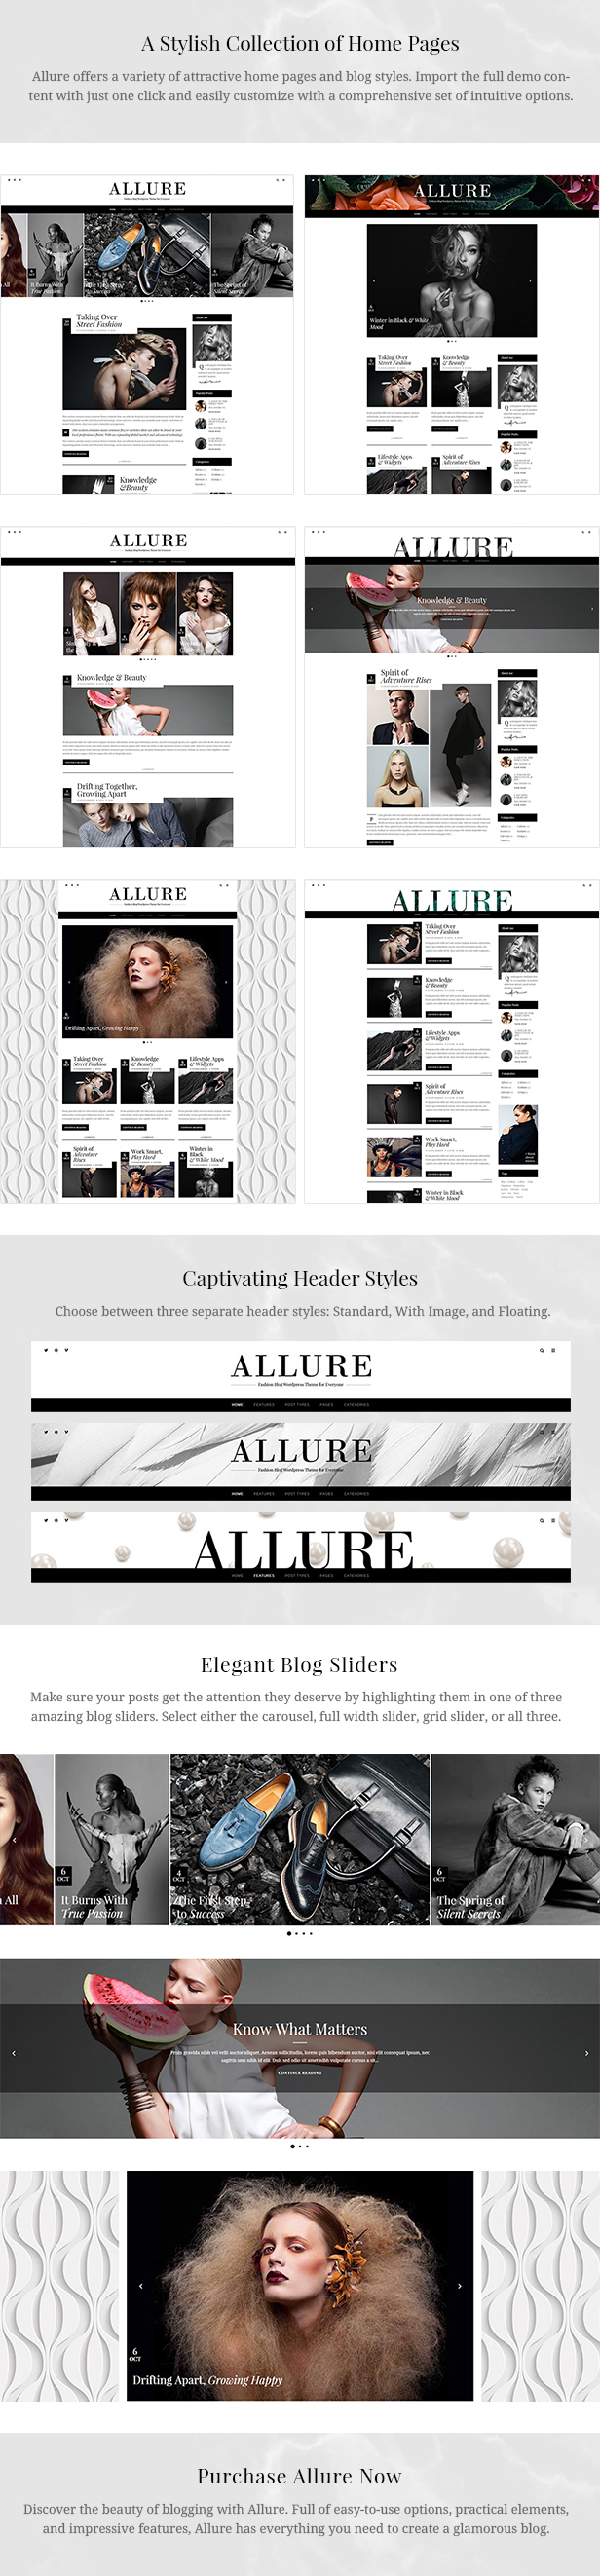 Allure - Fashion Blog Theme - 1